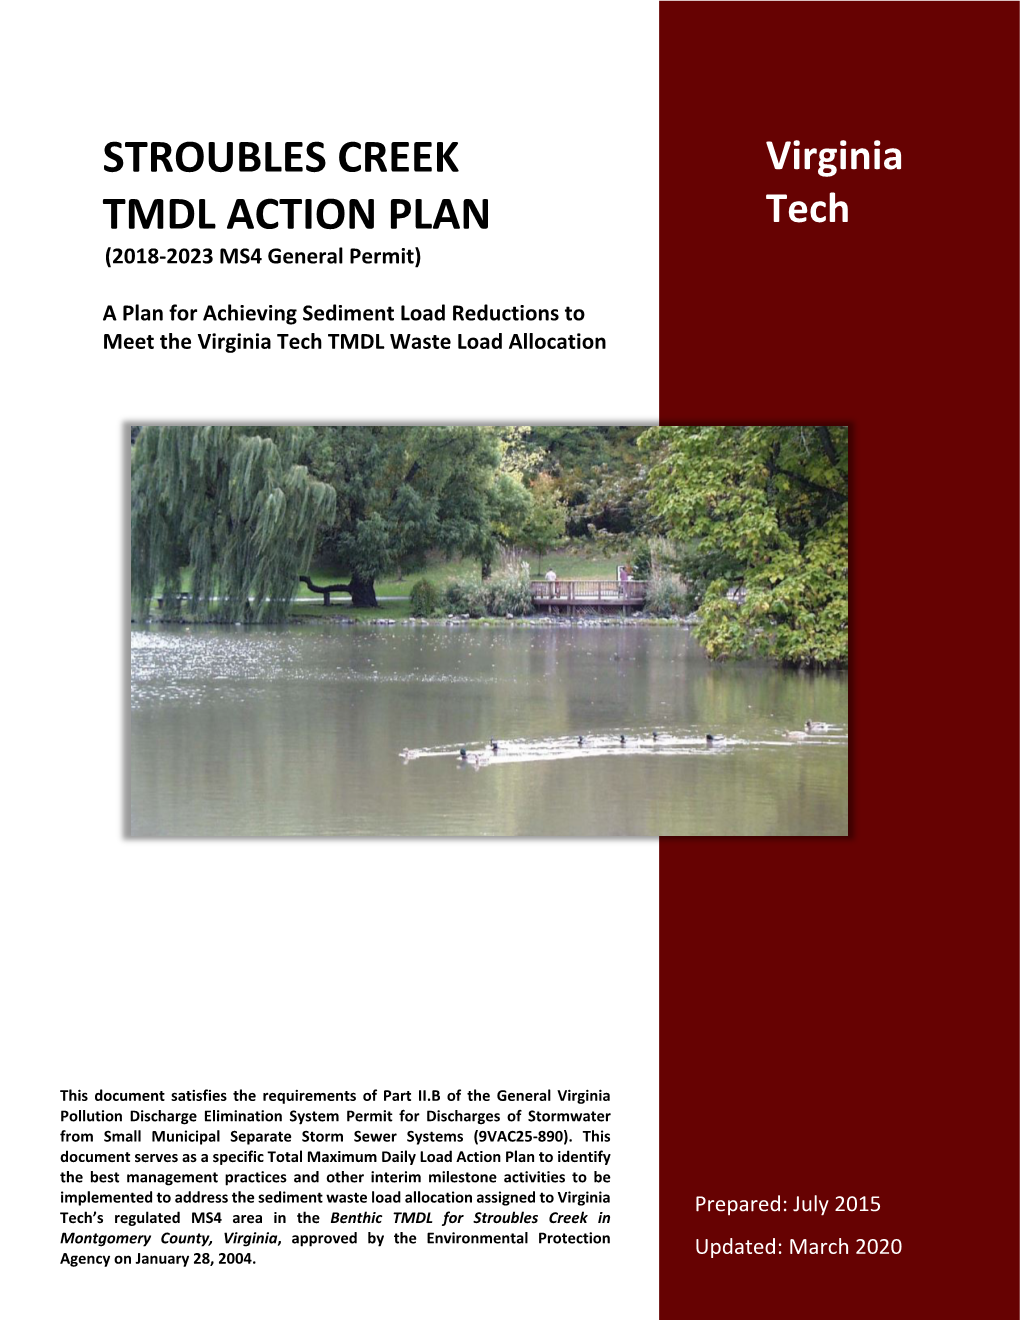 Stroubles Creek TMDL Action Plan